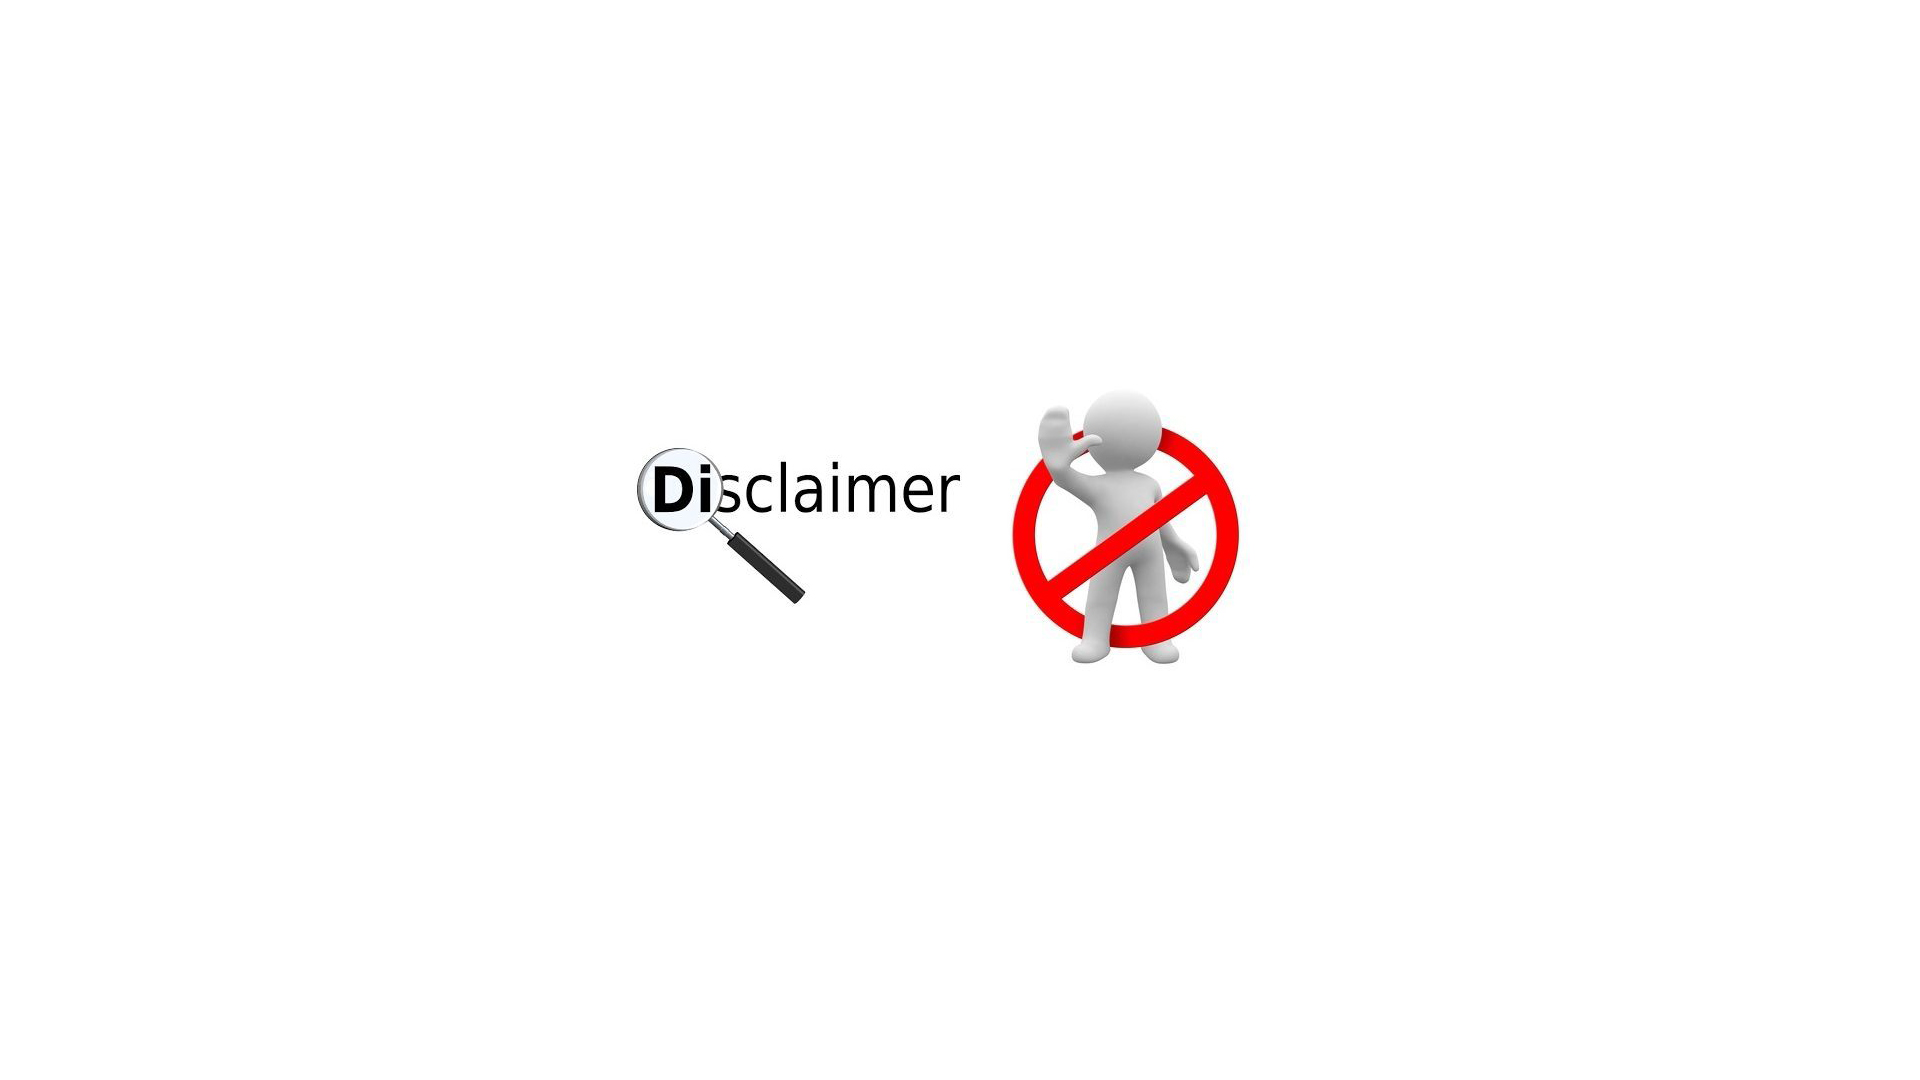 Disclaimer - NoLimit Knowledge Center